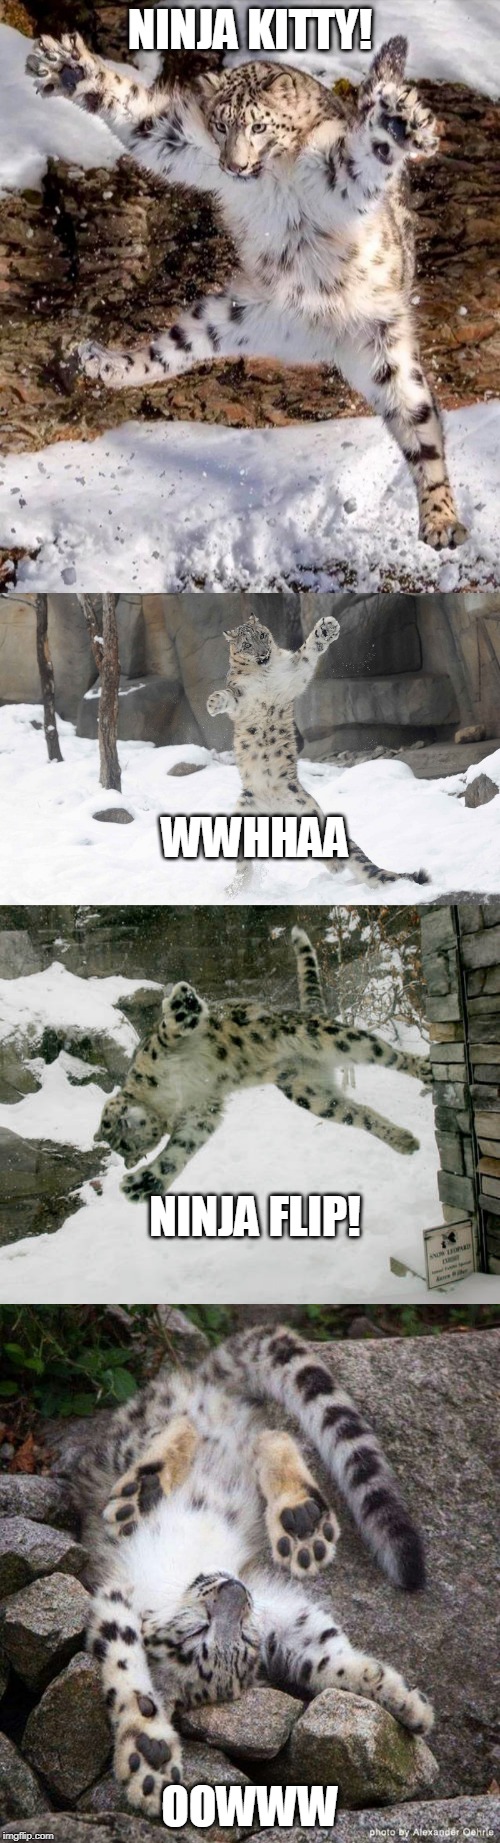 I WAS BORED | NINJA KITTY! WWHHAA; NINJA FLIP! OOWWW | image tagged in snow leopard,leopard,cats,funny,memes | made w/ Imgflip meme maker